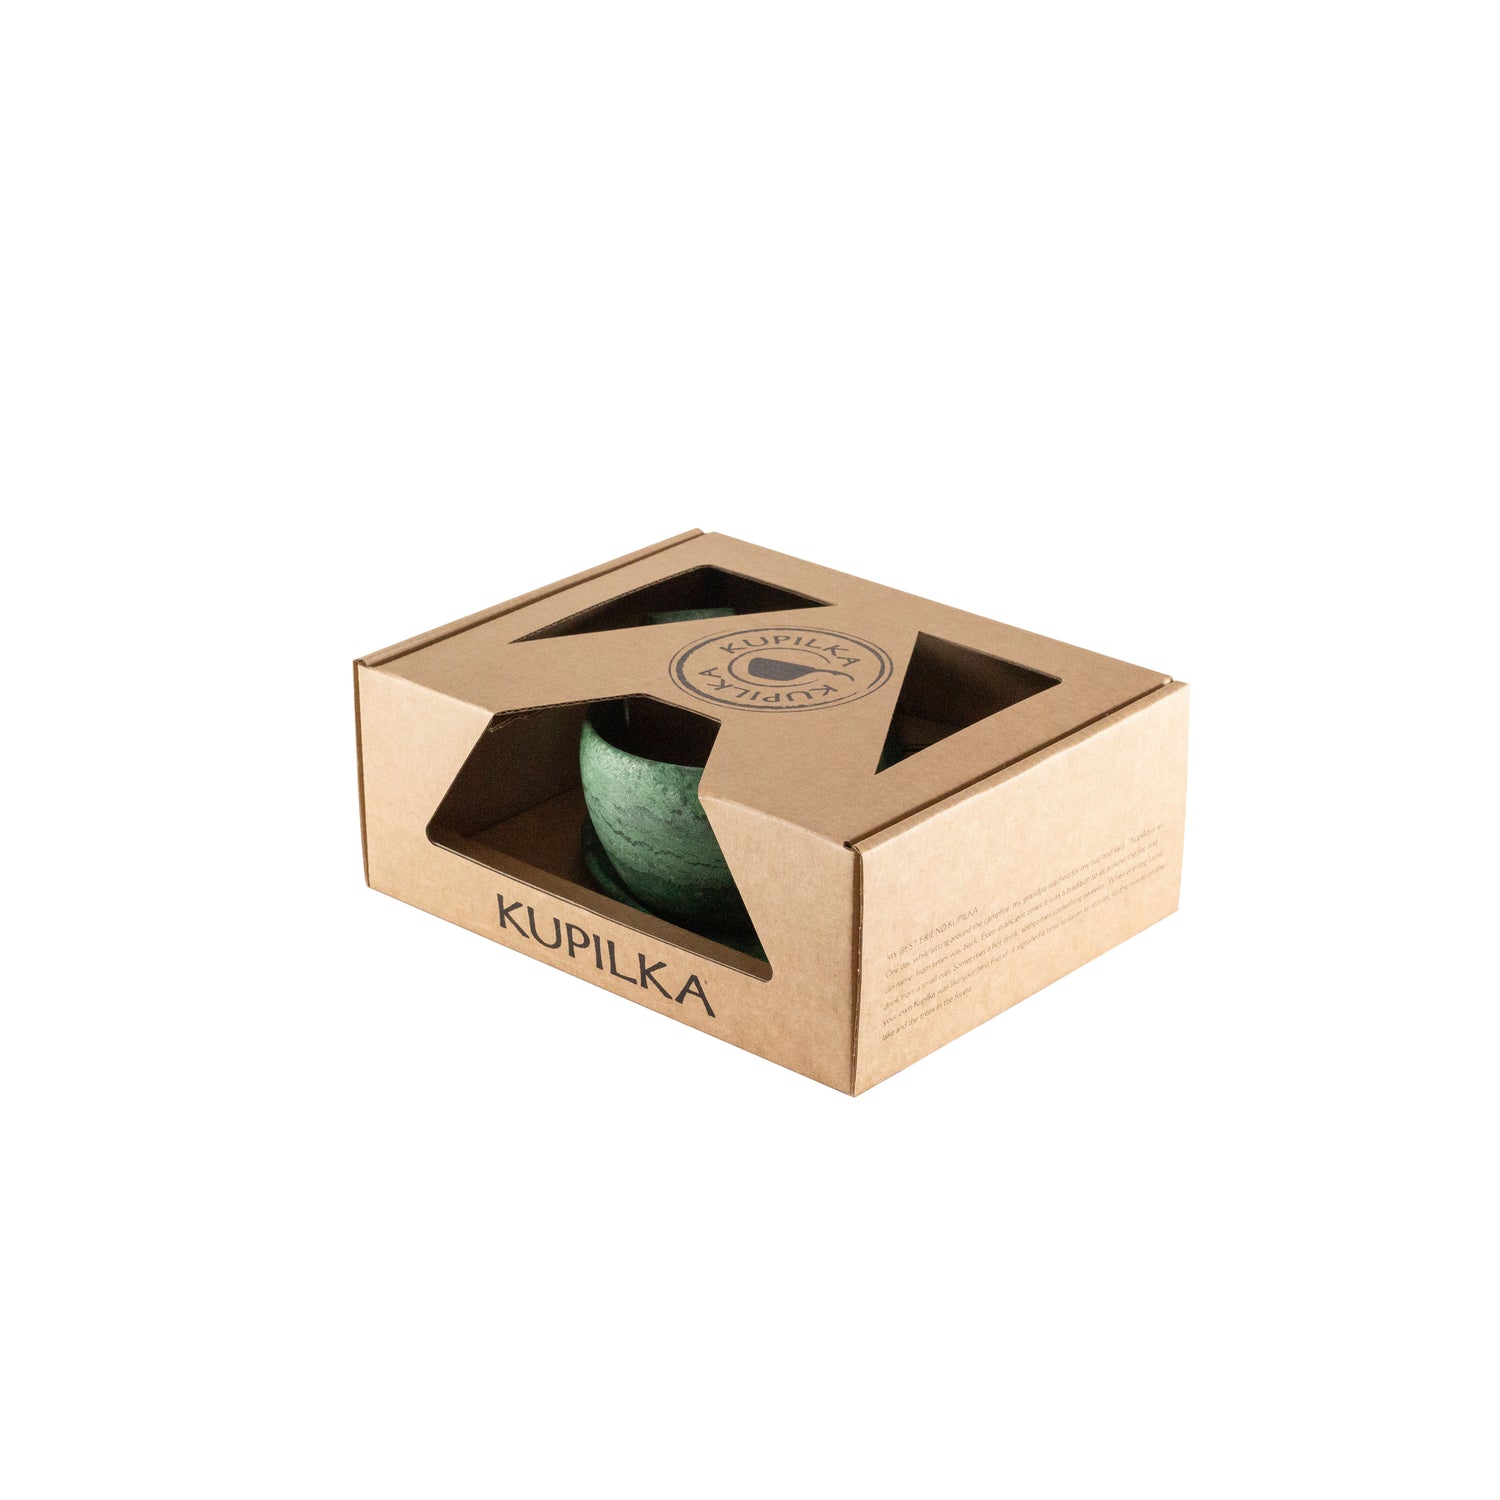 KUPILKA GIFT BOX - set